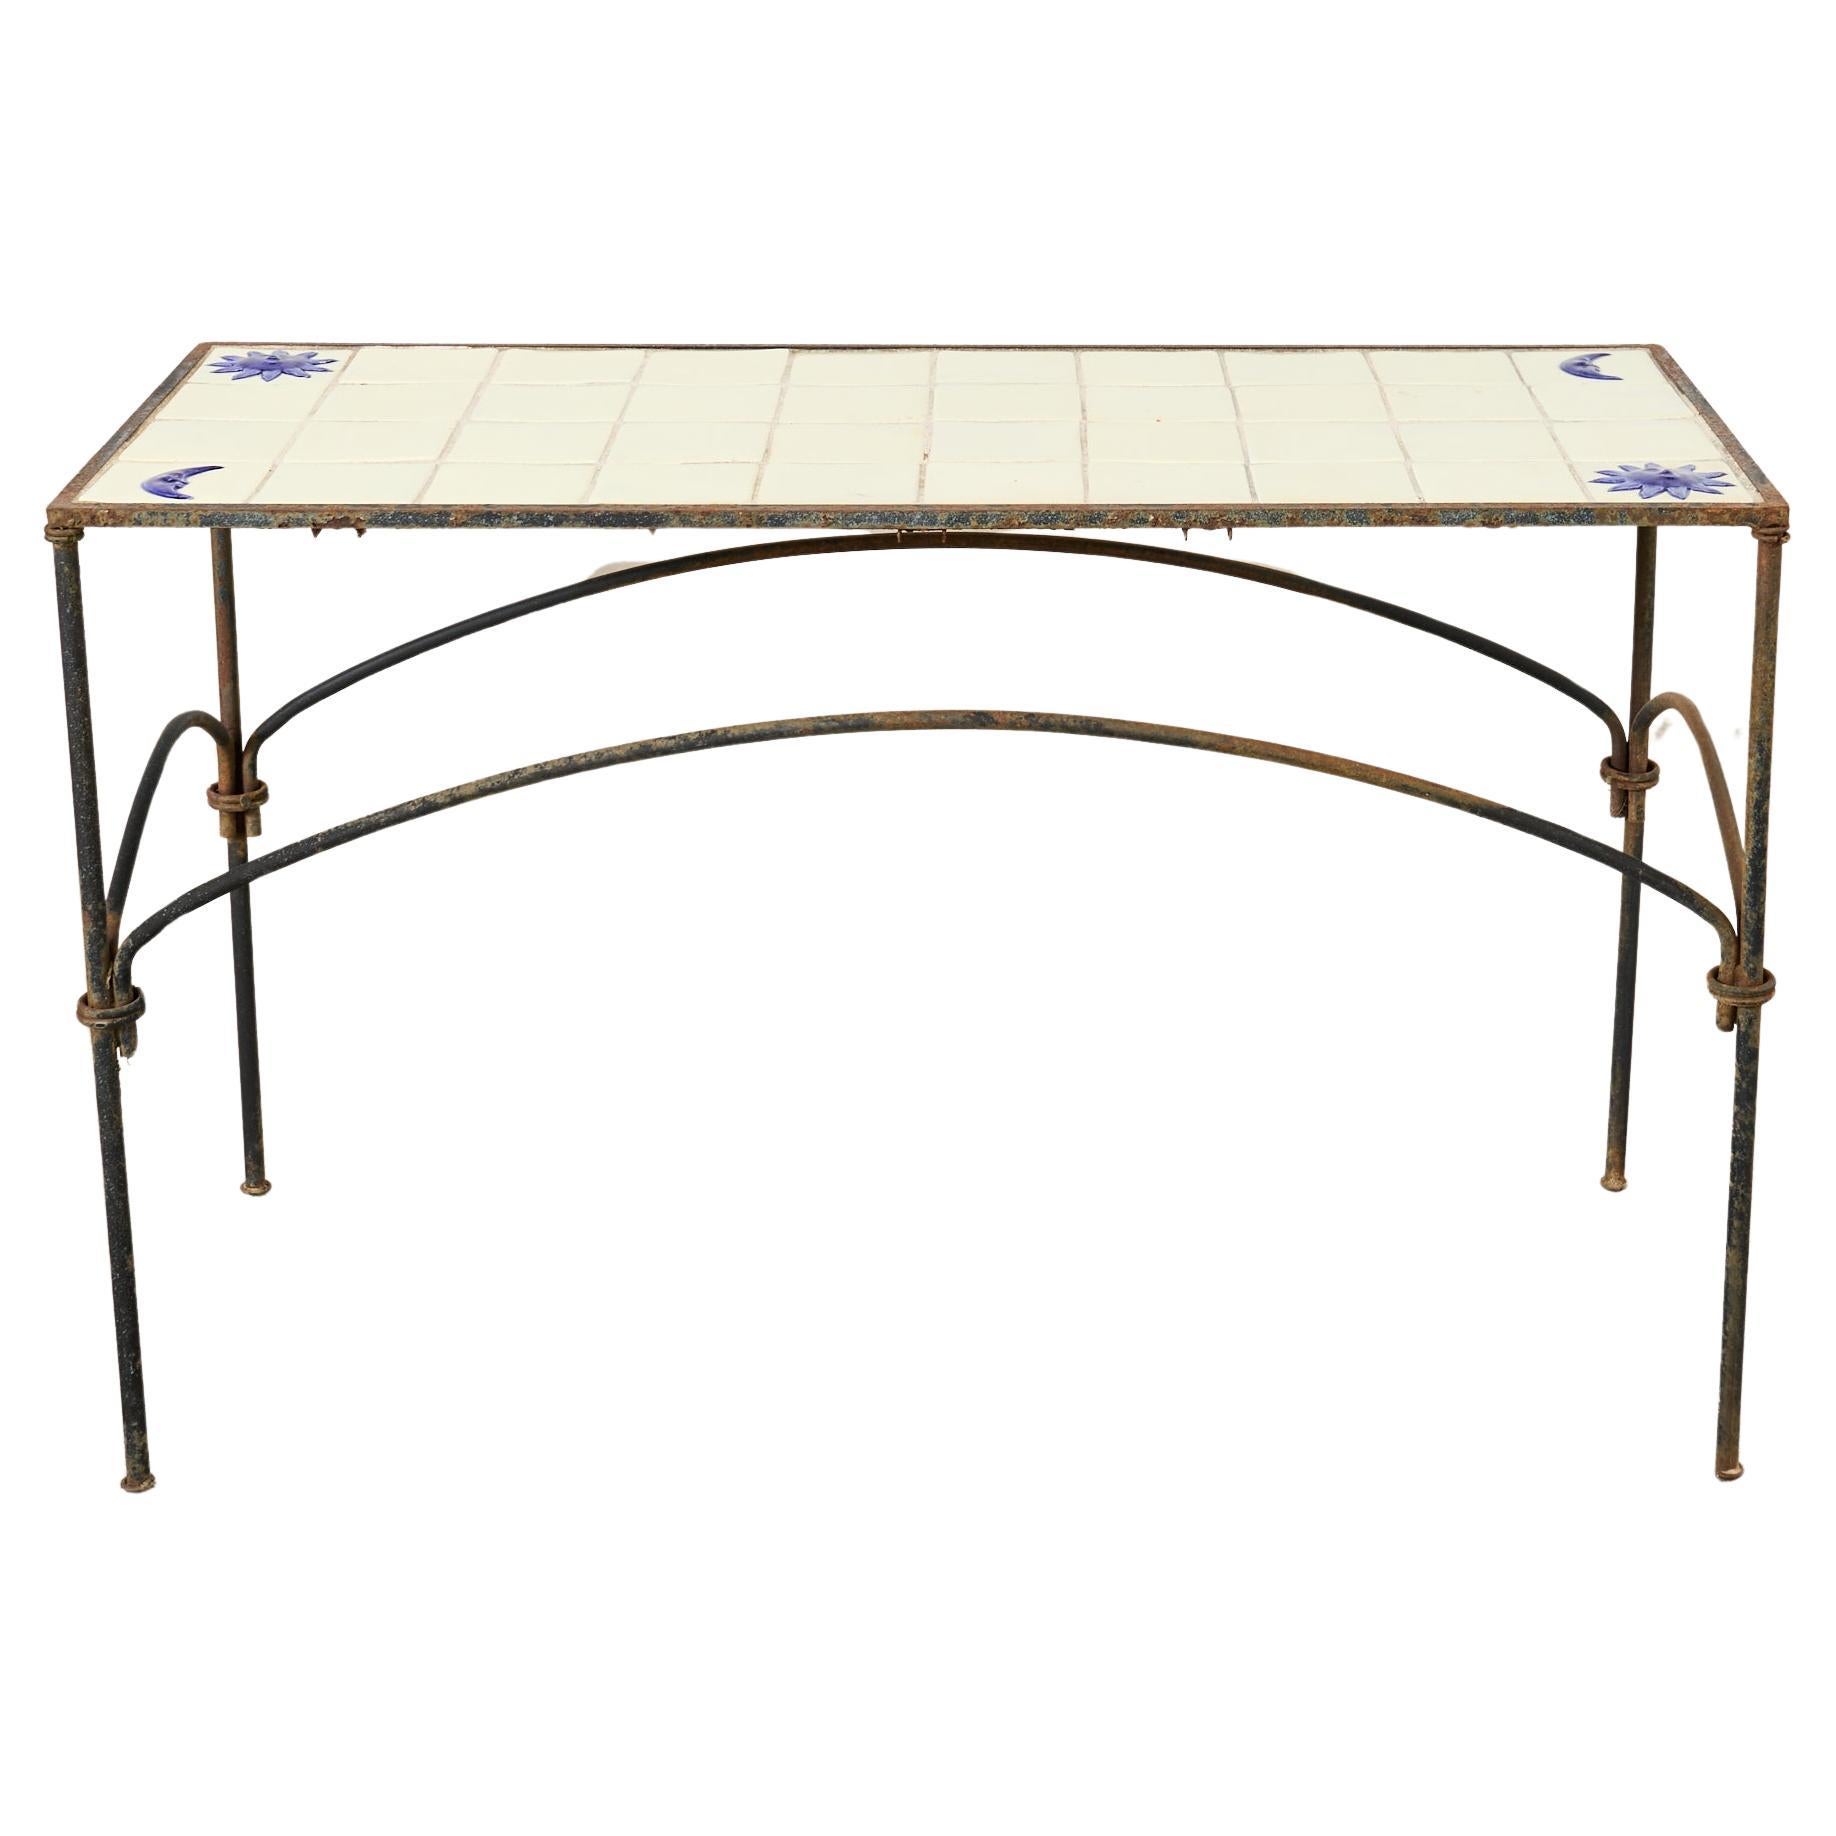 Rustic Italian Amalfi Style Iron Tile Top Garden Table For Sale